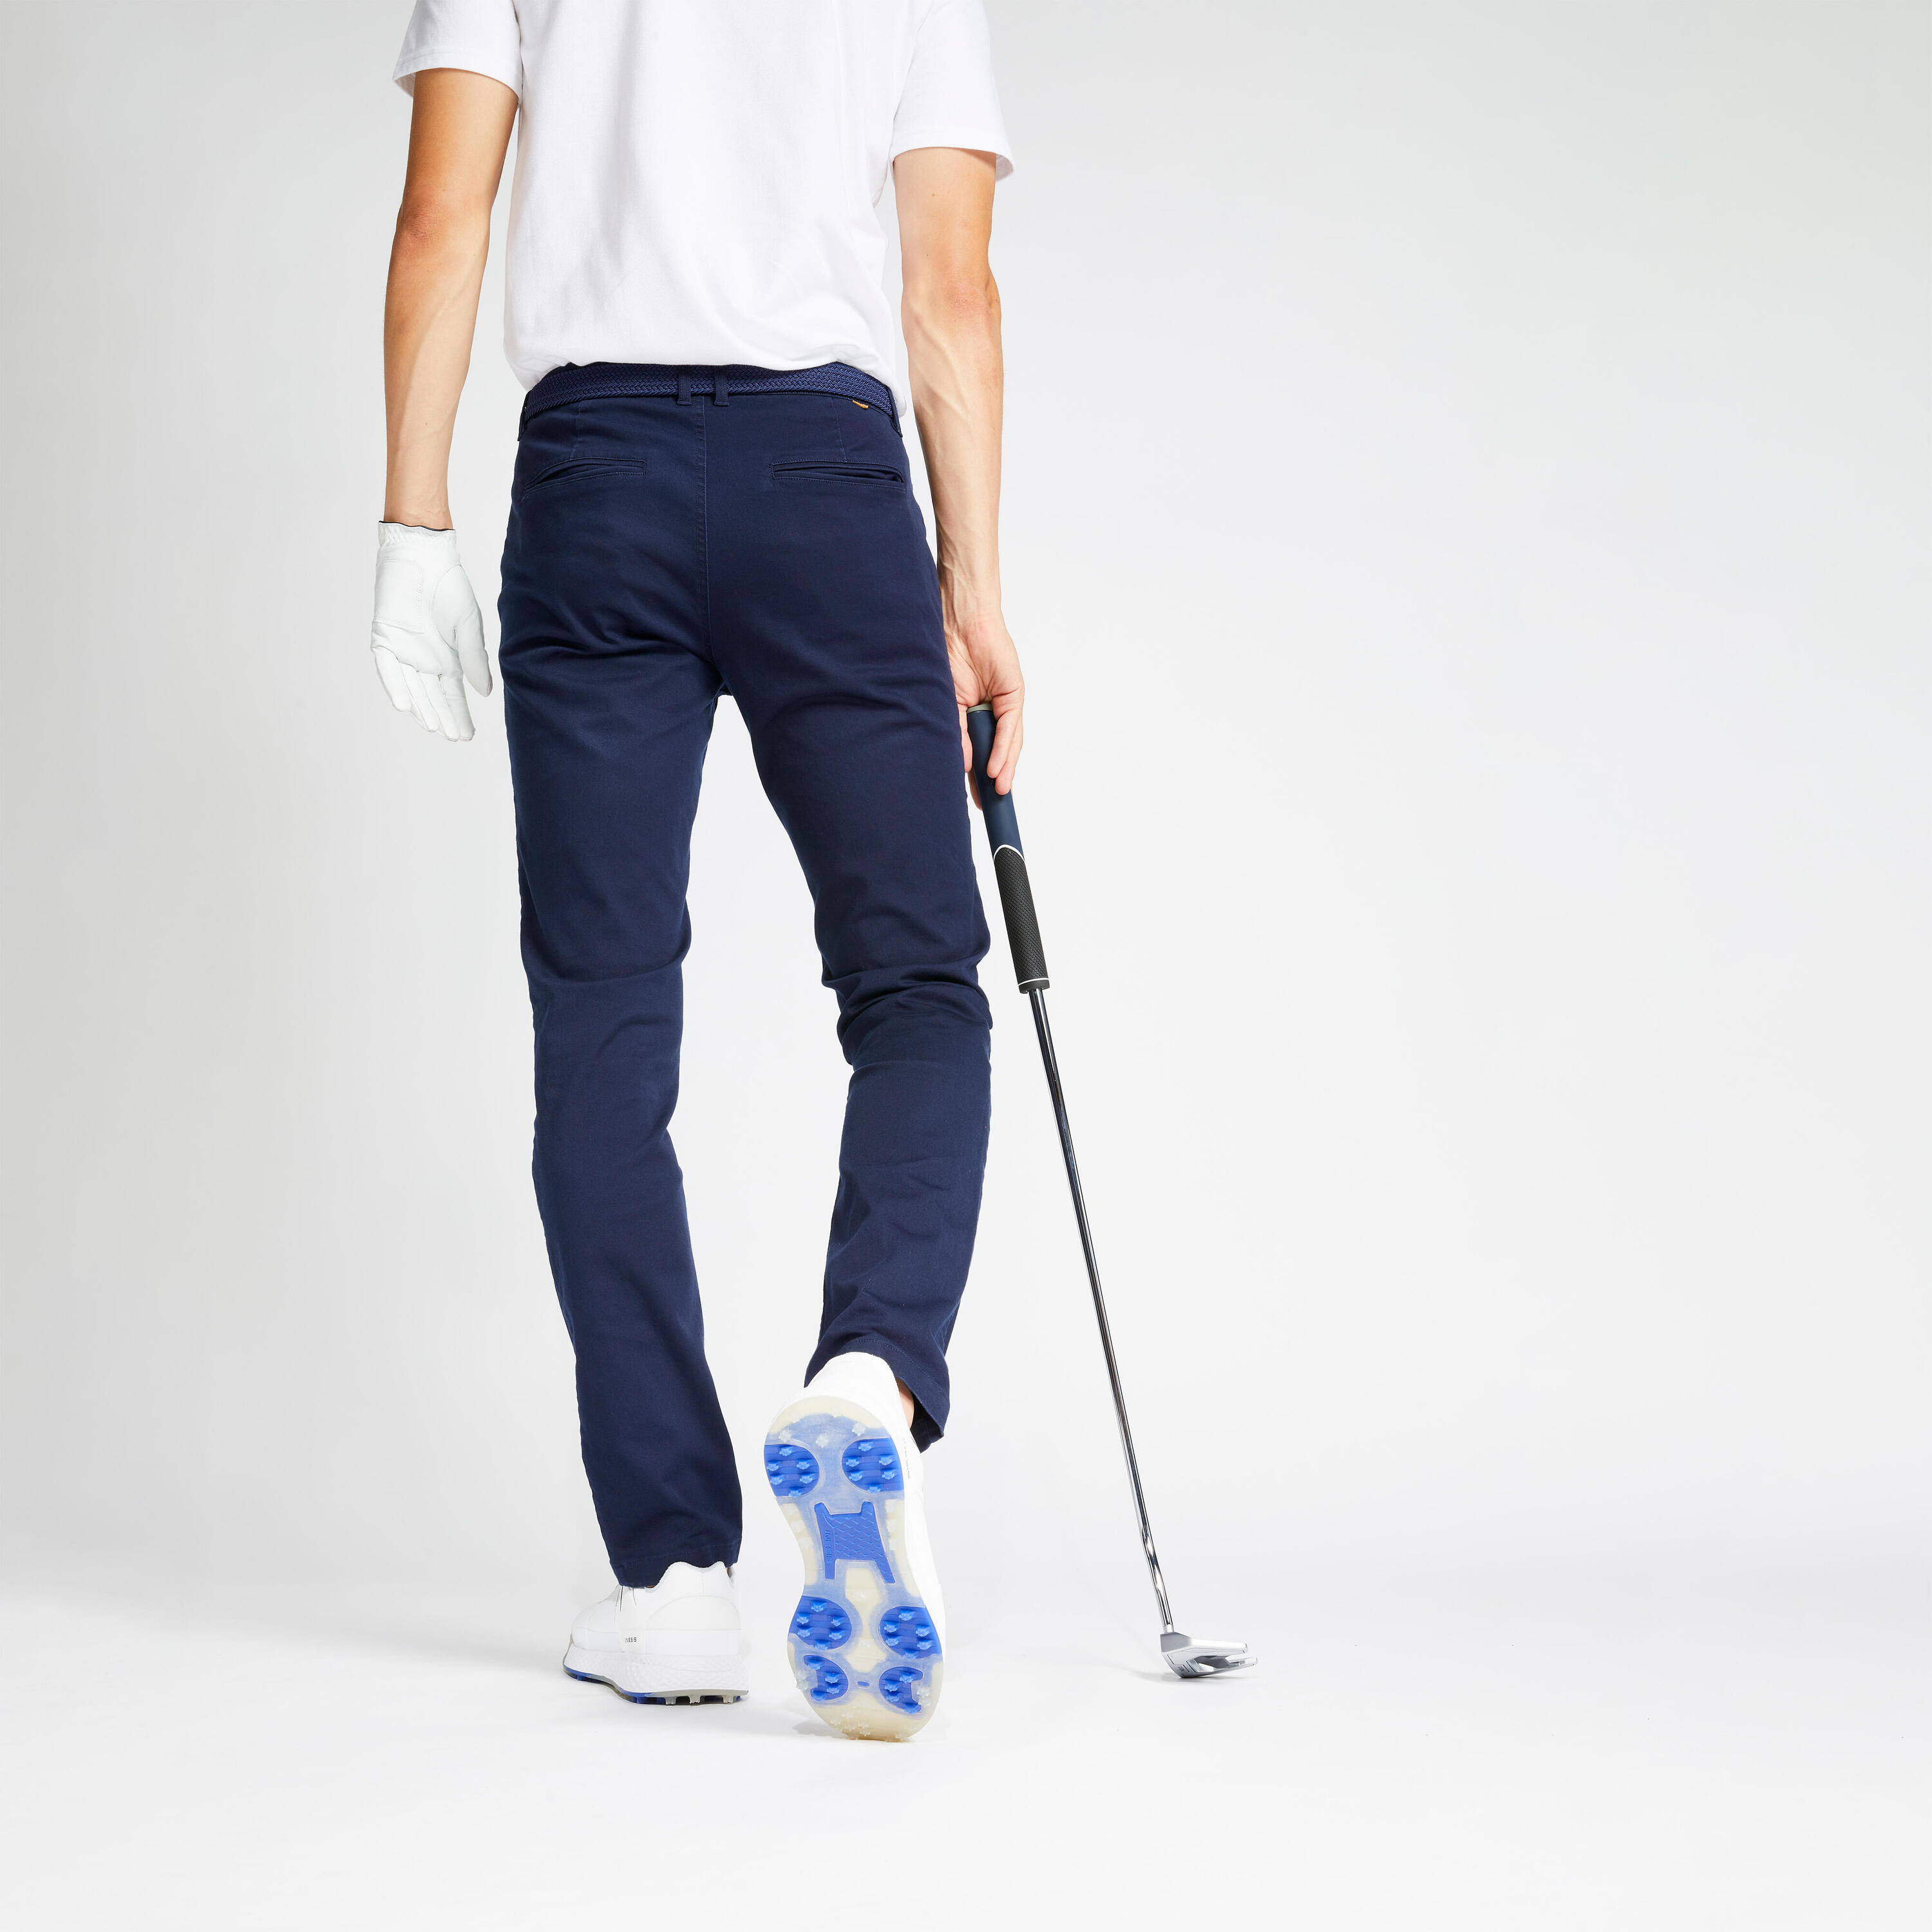 Men's golf trousers - MW500 navy blue 2/6